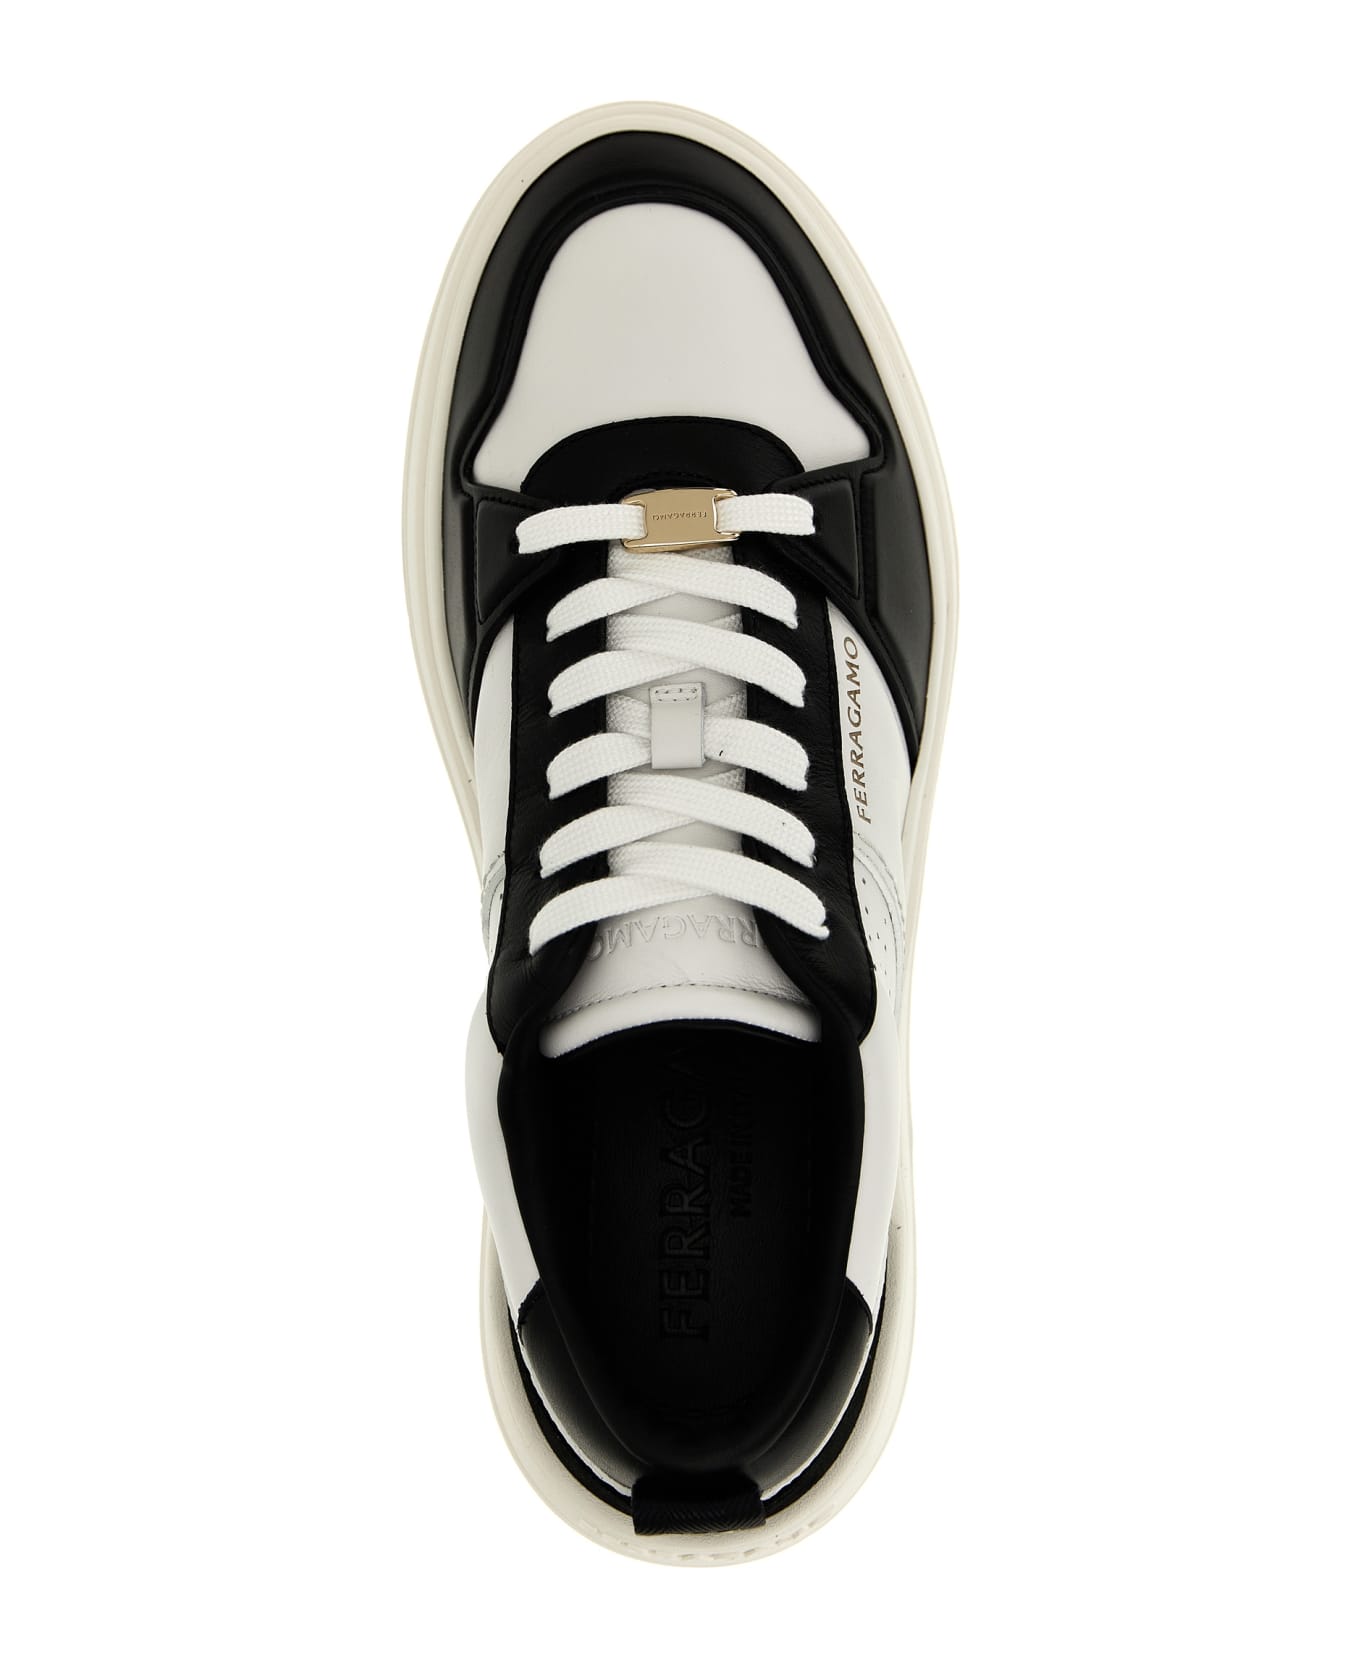 Ferragamo 'dennis' Sneakers - White/Black